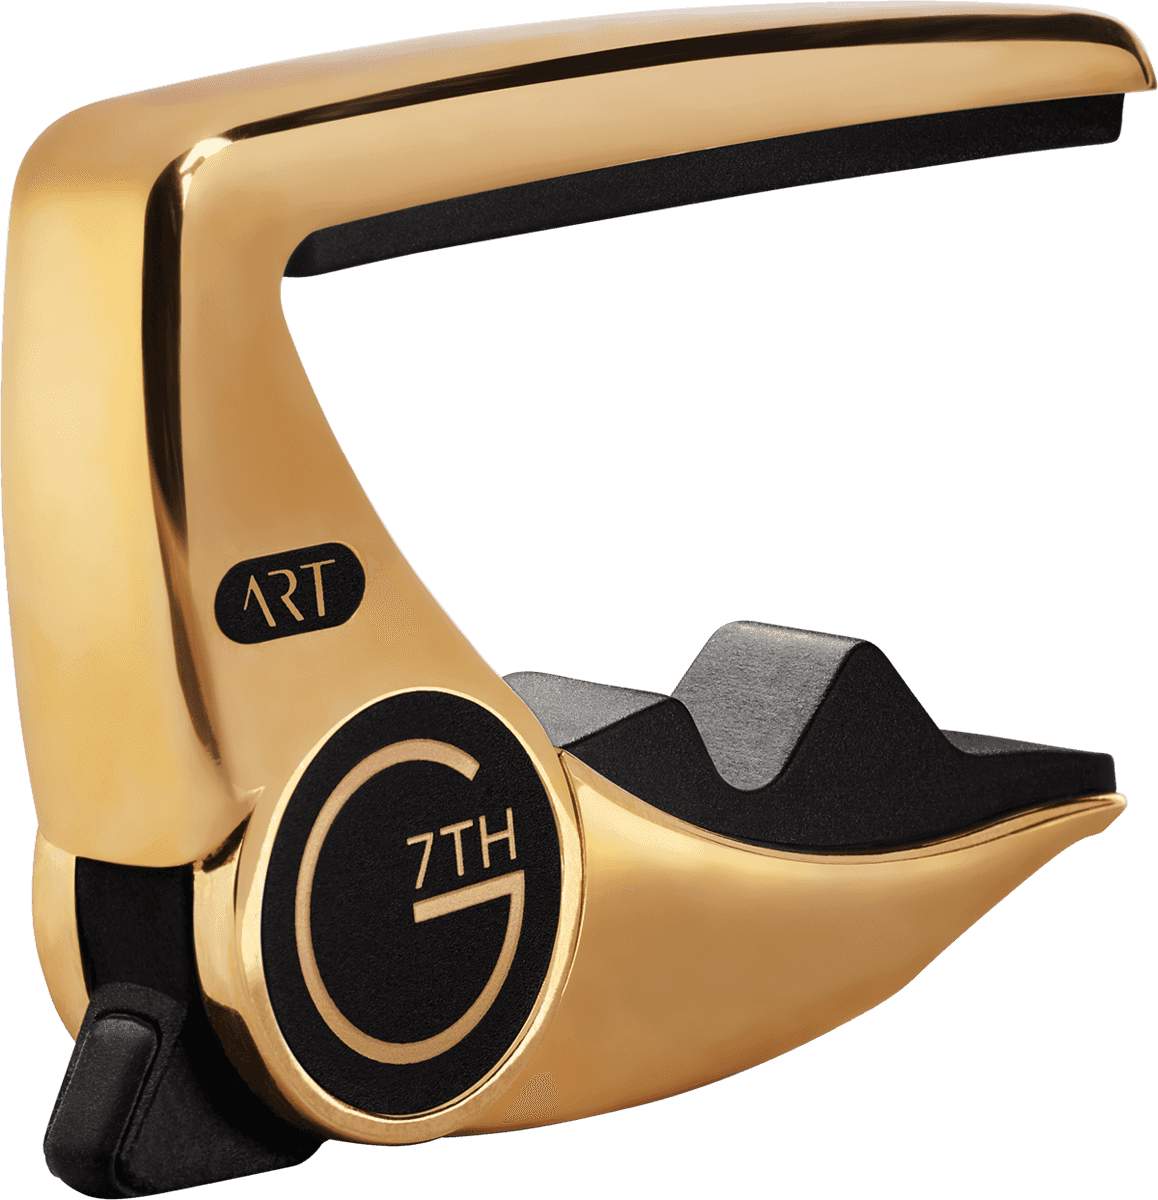 G7th Performance 3 Steel String 18kt Gold-plate - Kapodaster - Variation 1